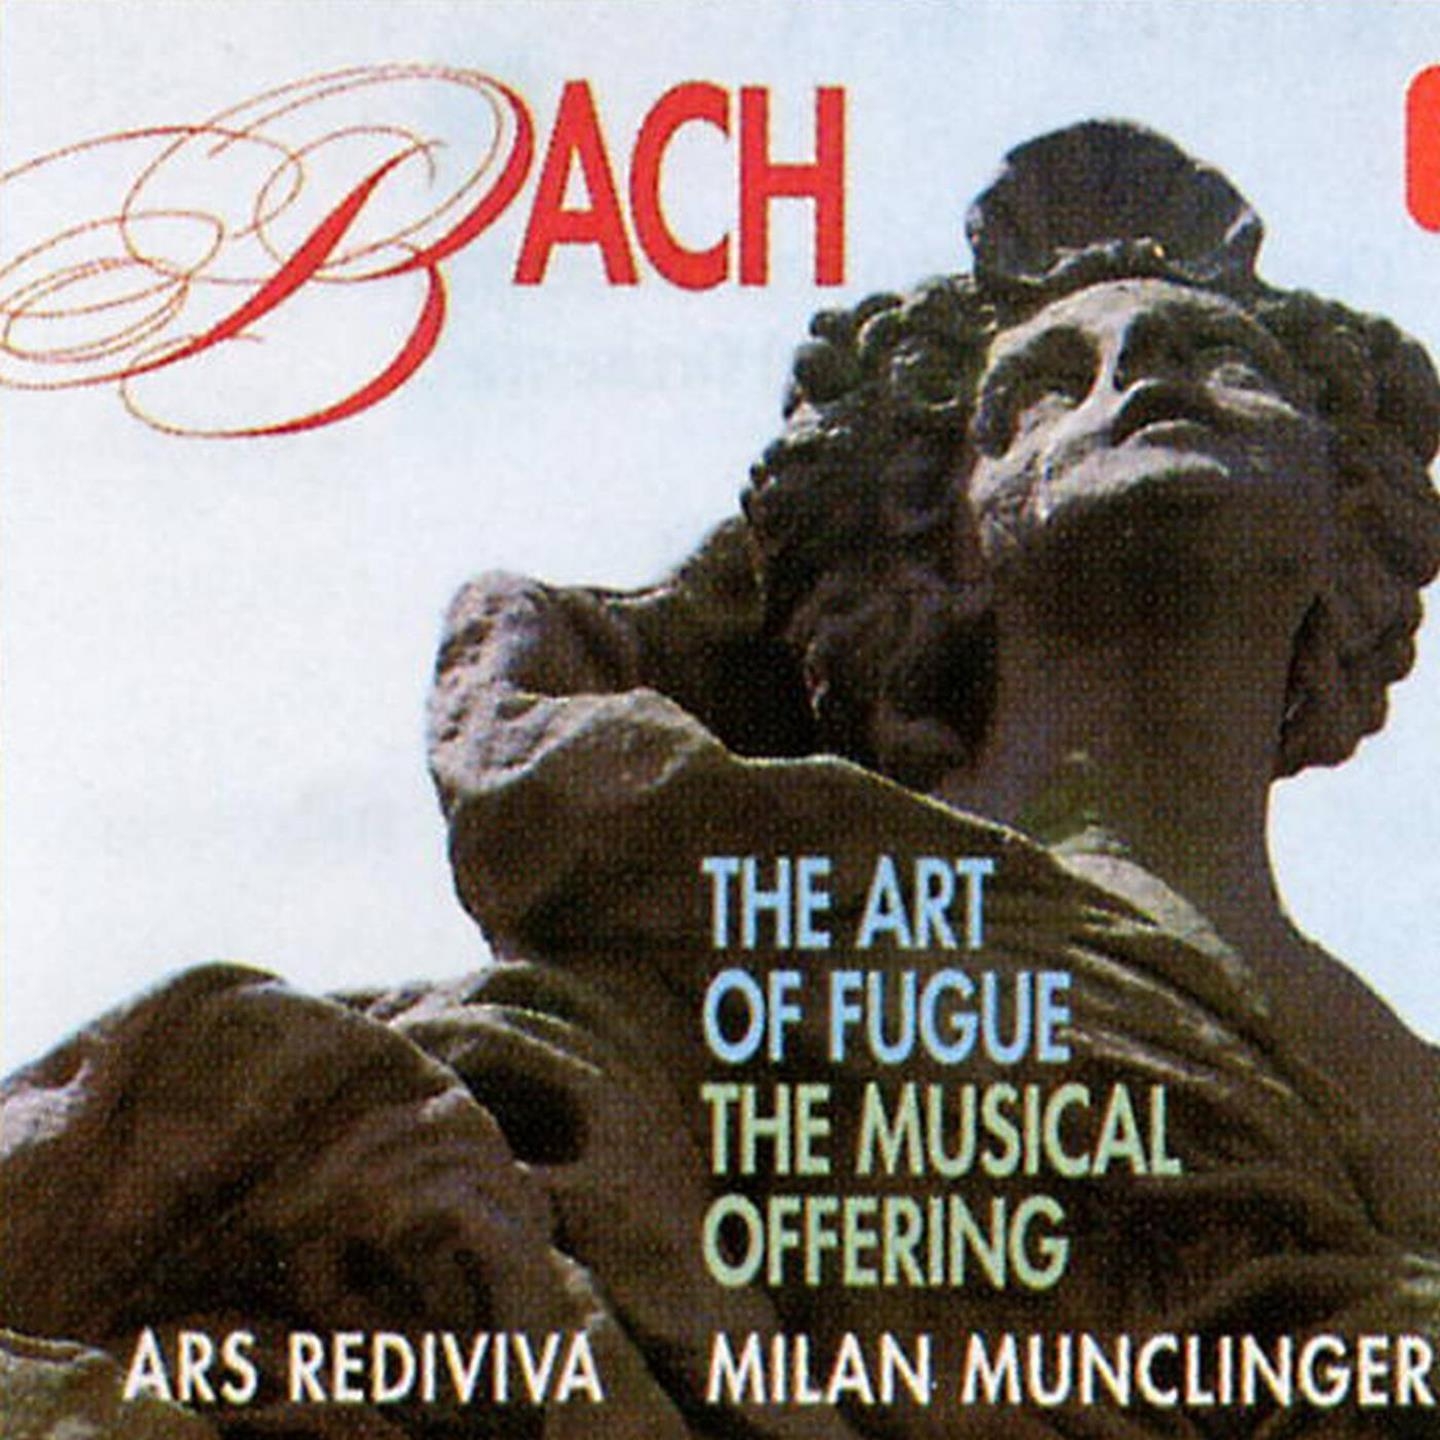 The Musical Offering, Op. 6, BWV 1079, Regis issu cantio et reliqua canonica arte resoluta: No. 2, Ricercare a 6